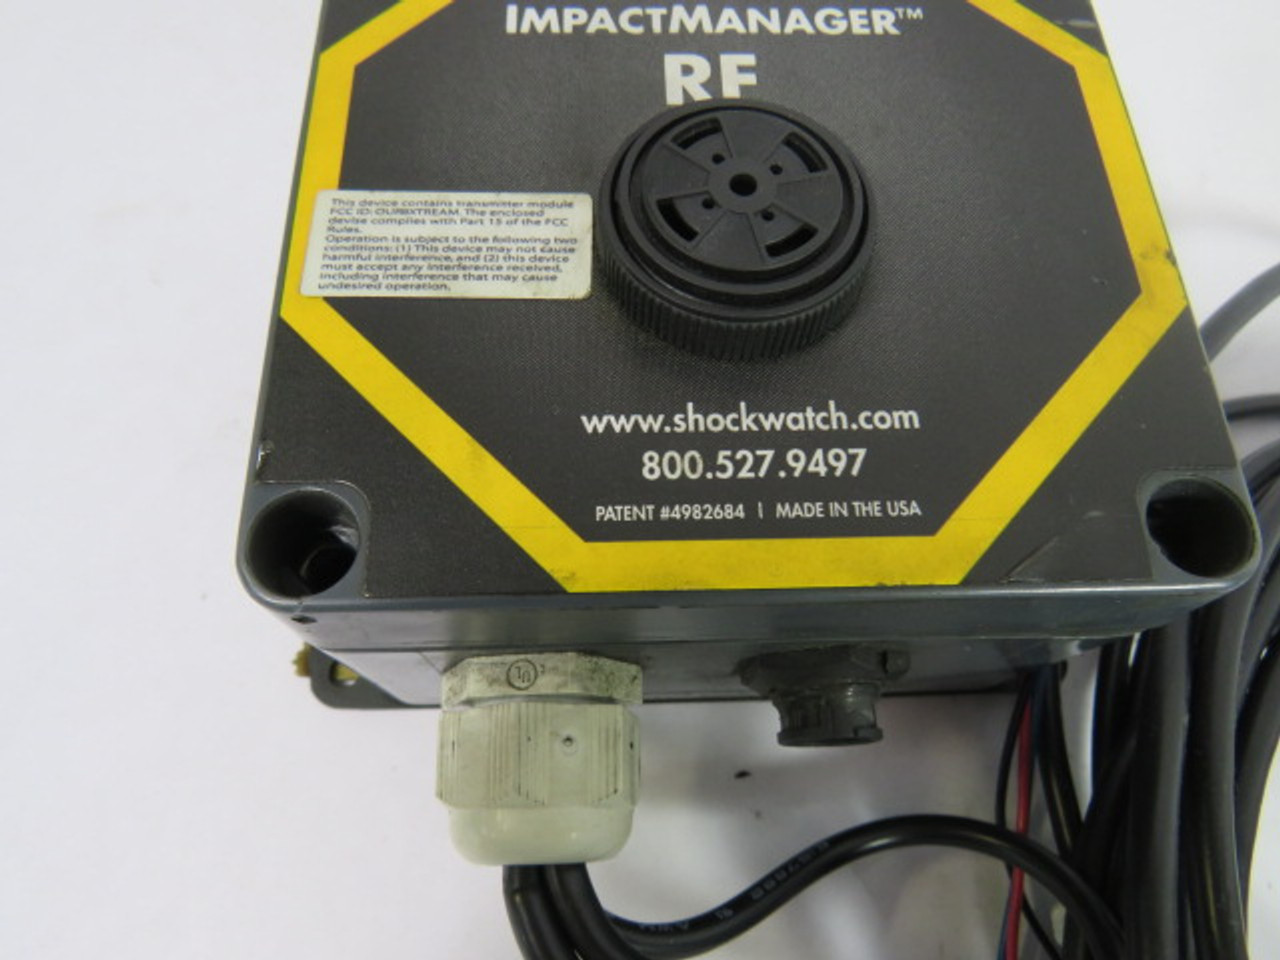 Shockwatch RF1300 Impact Manager * Missing Screws & End Sensor* ! AS IS !